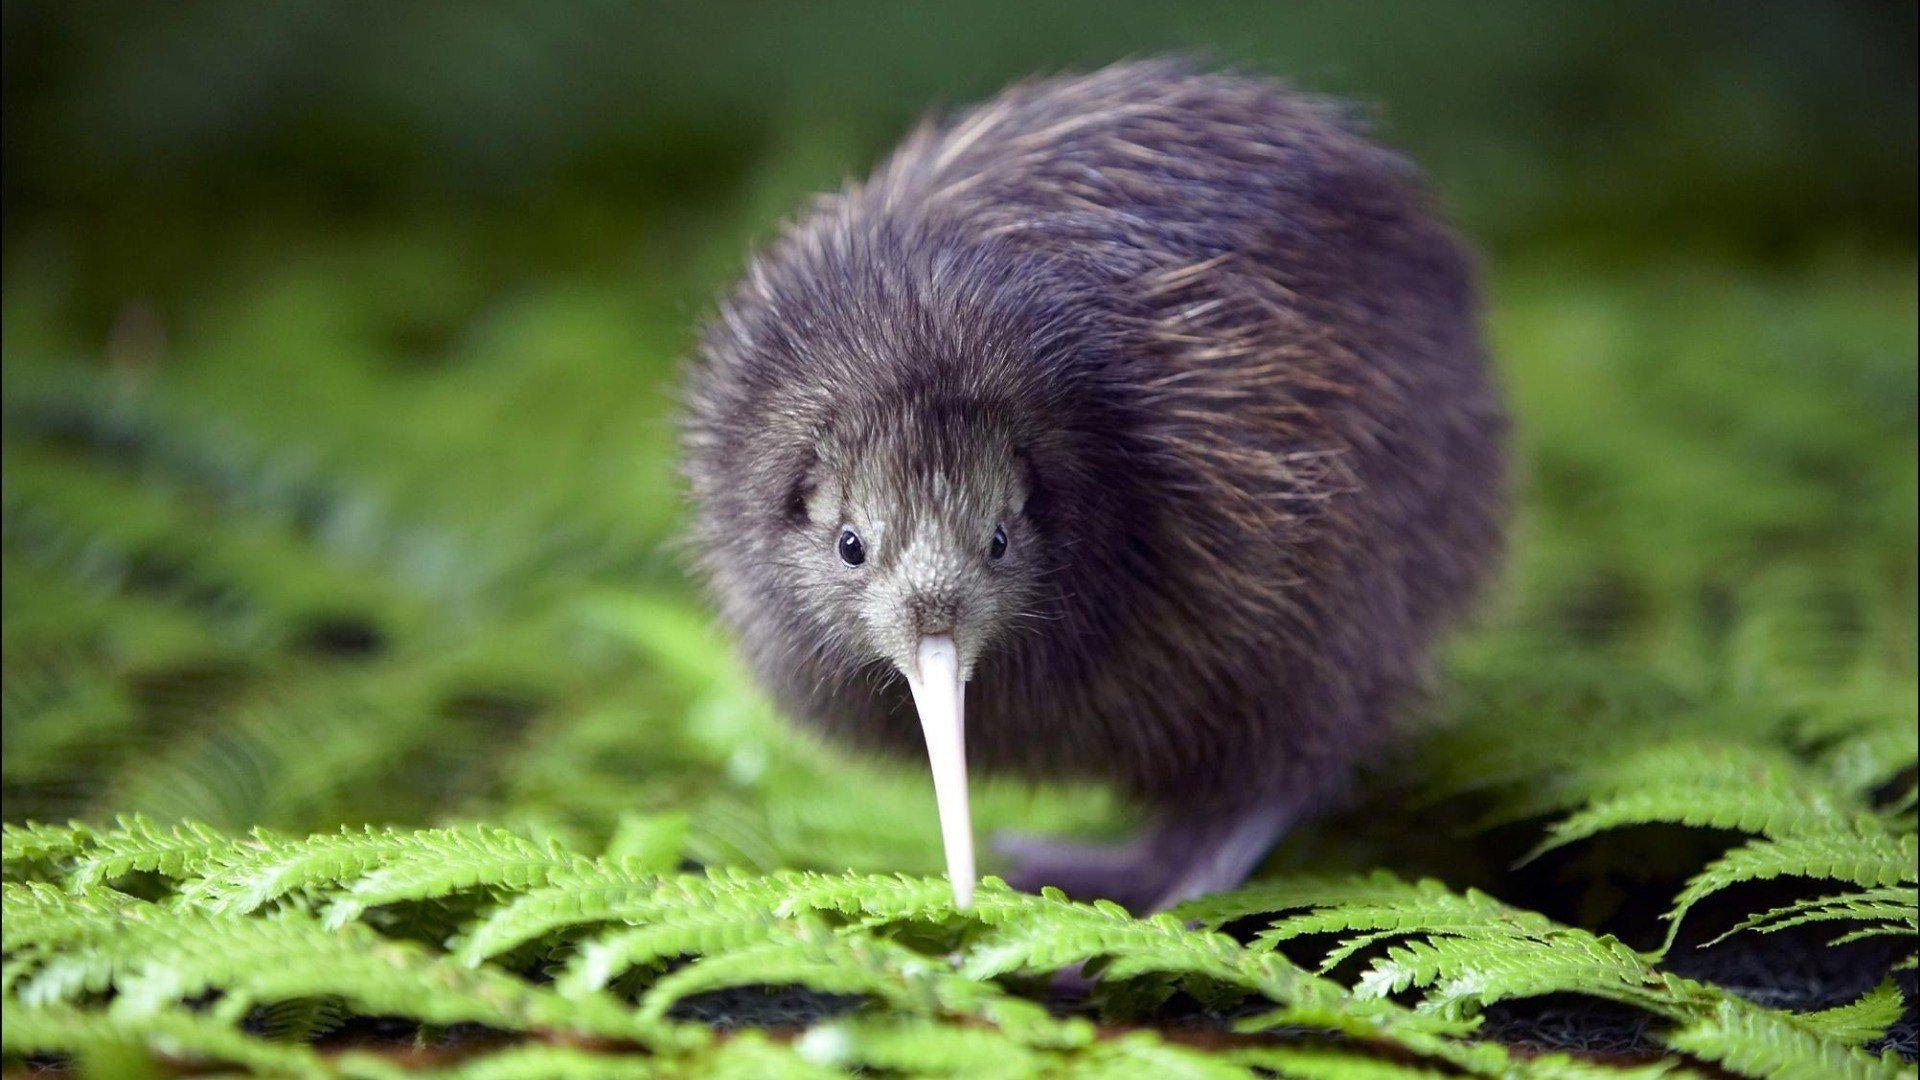 Kiwi bird national symbol of New Zealand wallpaper and image